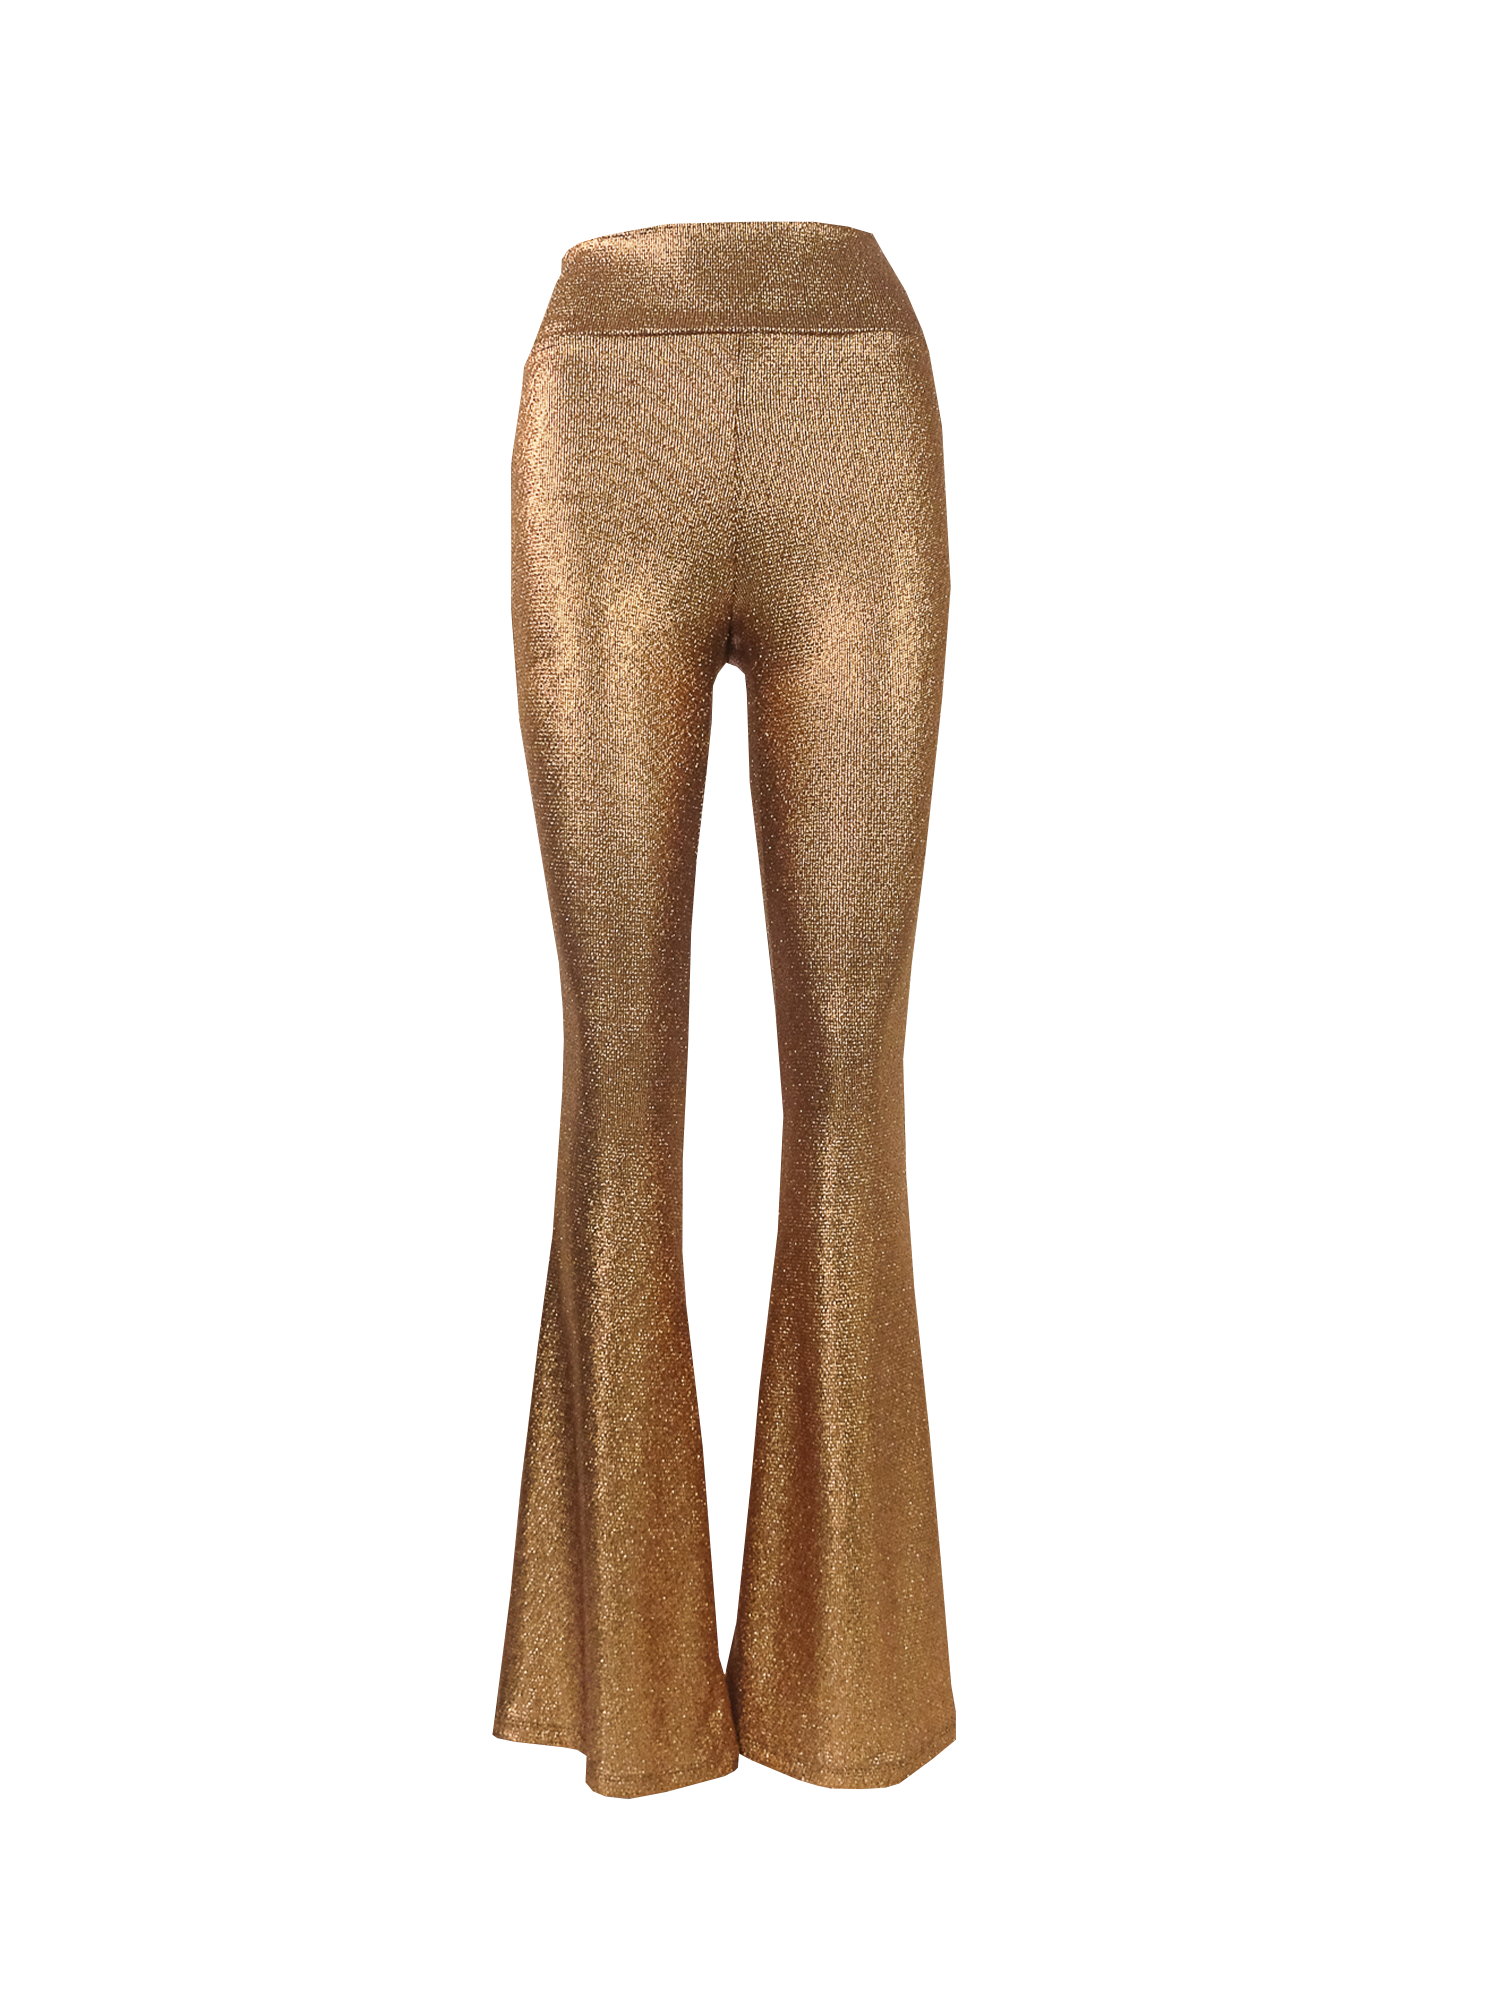 LOLA - flared trouser with high waist in bronze lurex